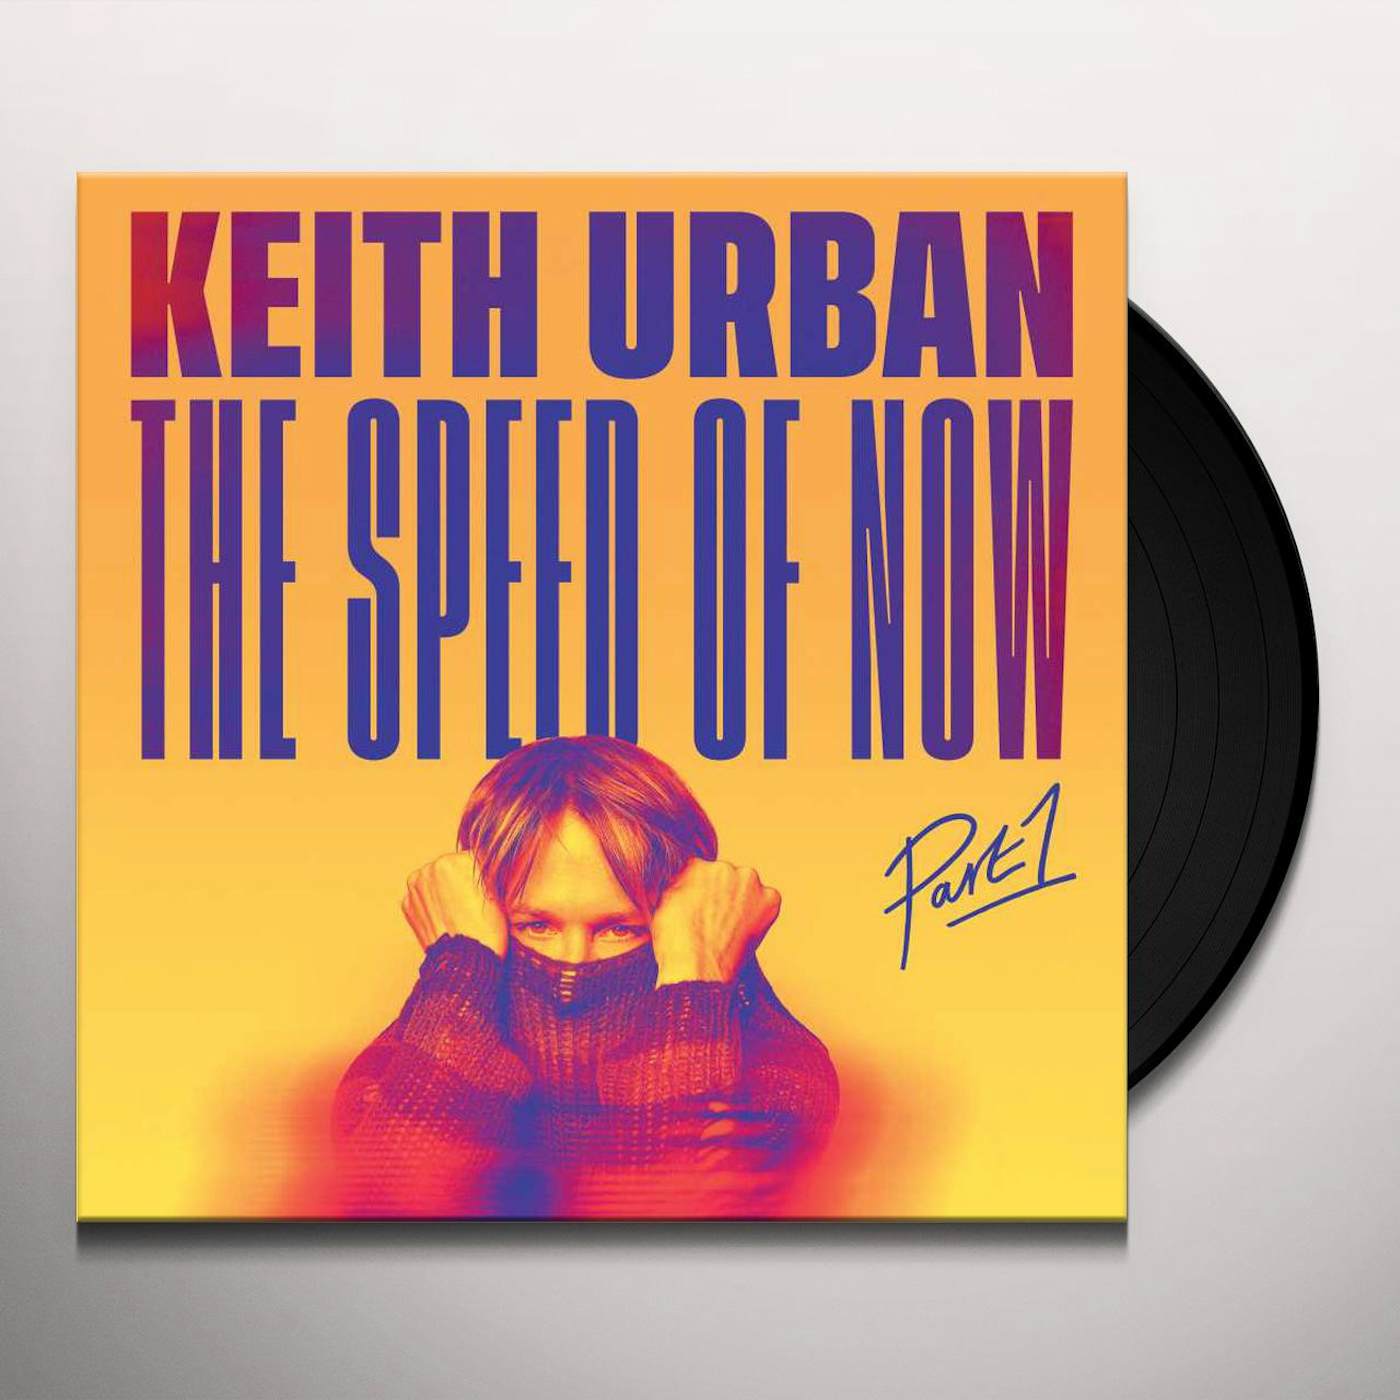 Keith Urban SPEED OF NOW PART 1 (2LP) Vinyl Record